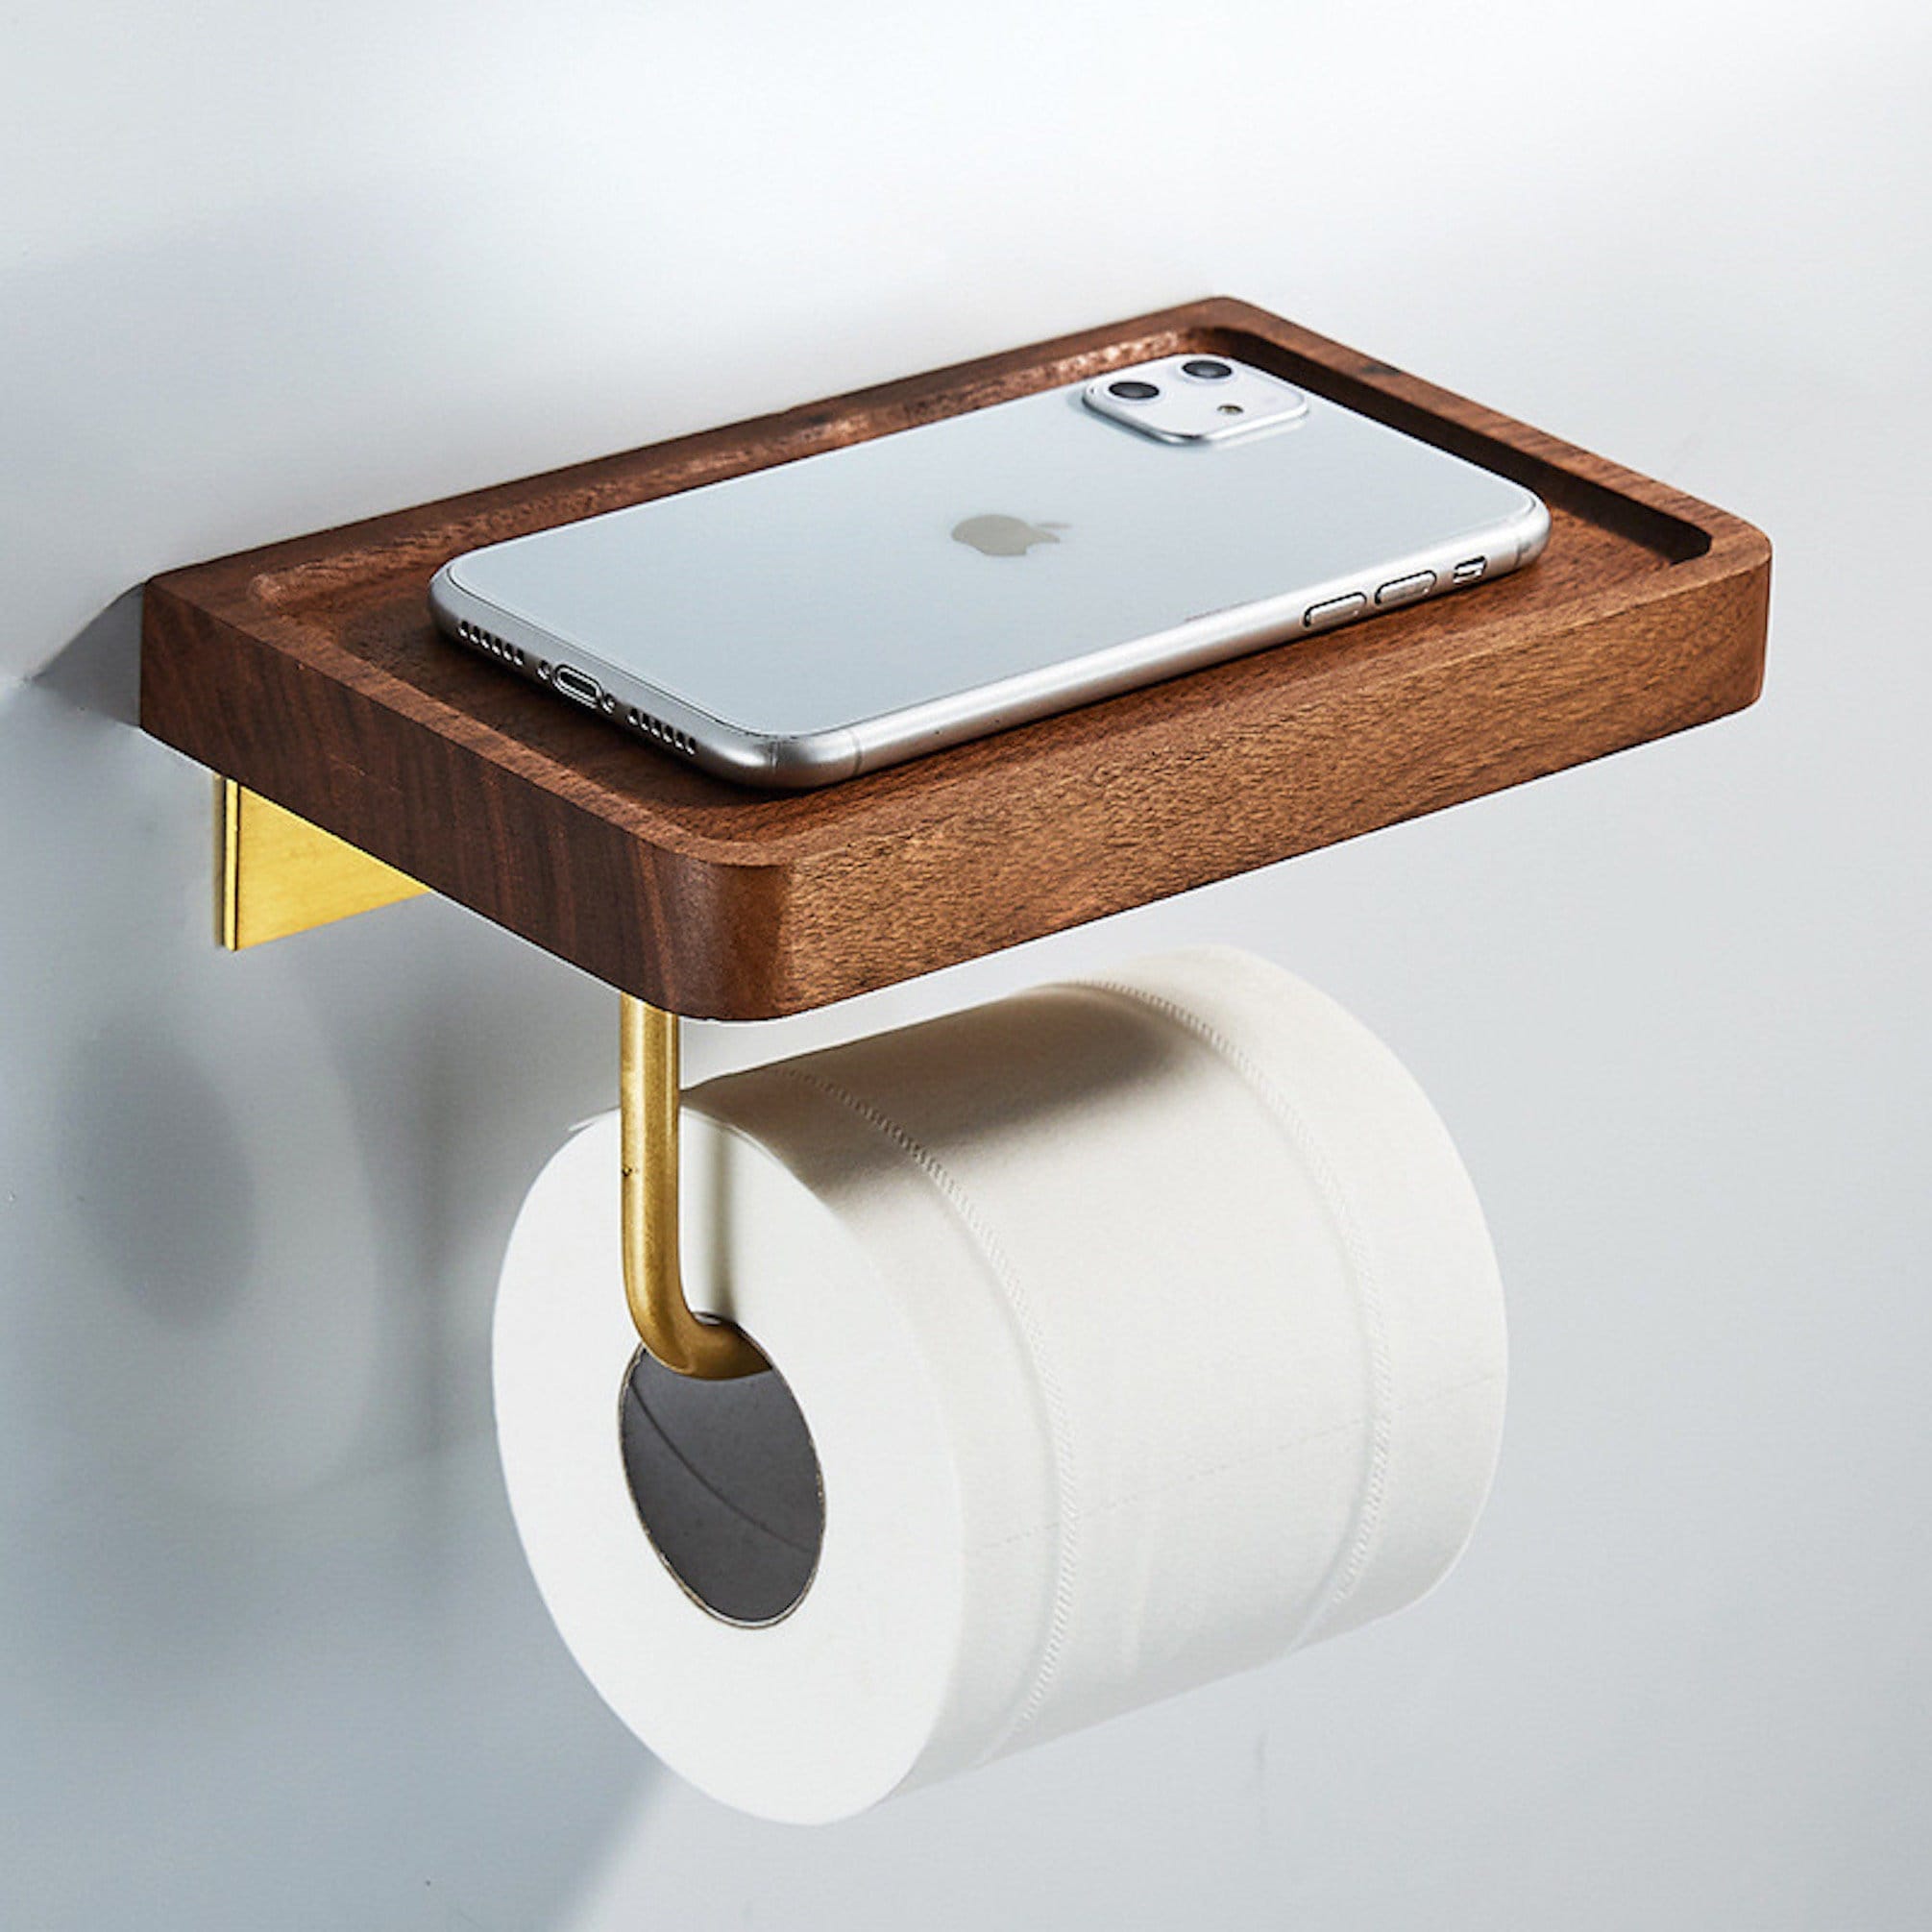 ADAM Toilet Roll Holder With Shelf, Toilet Paper Holder 